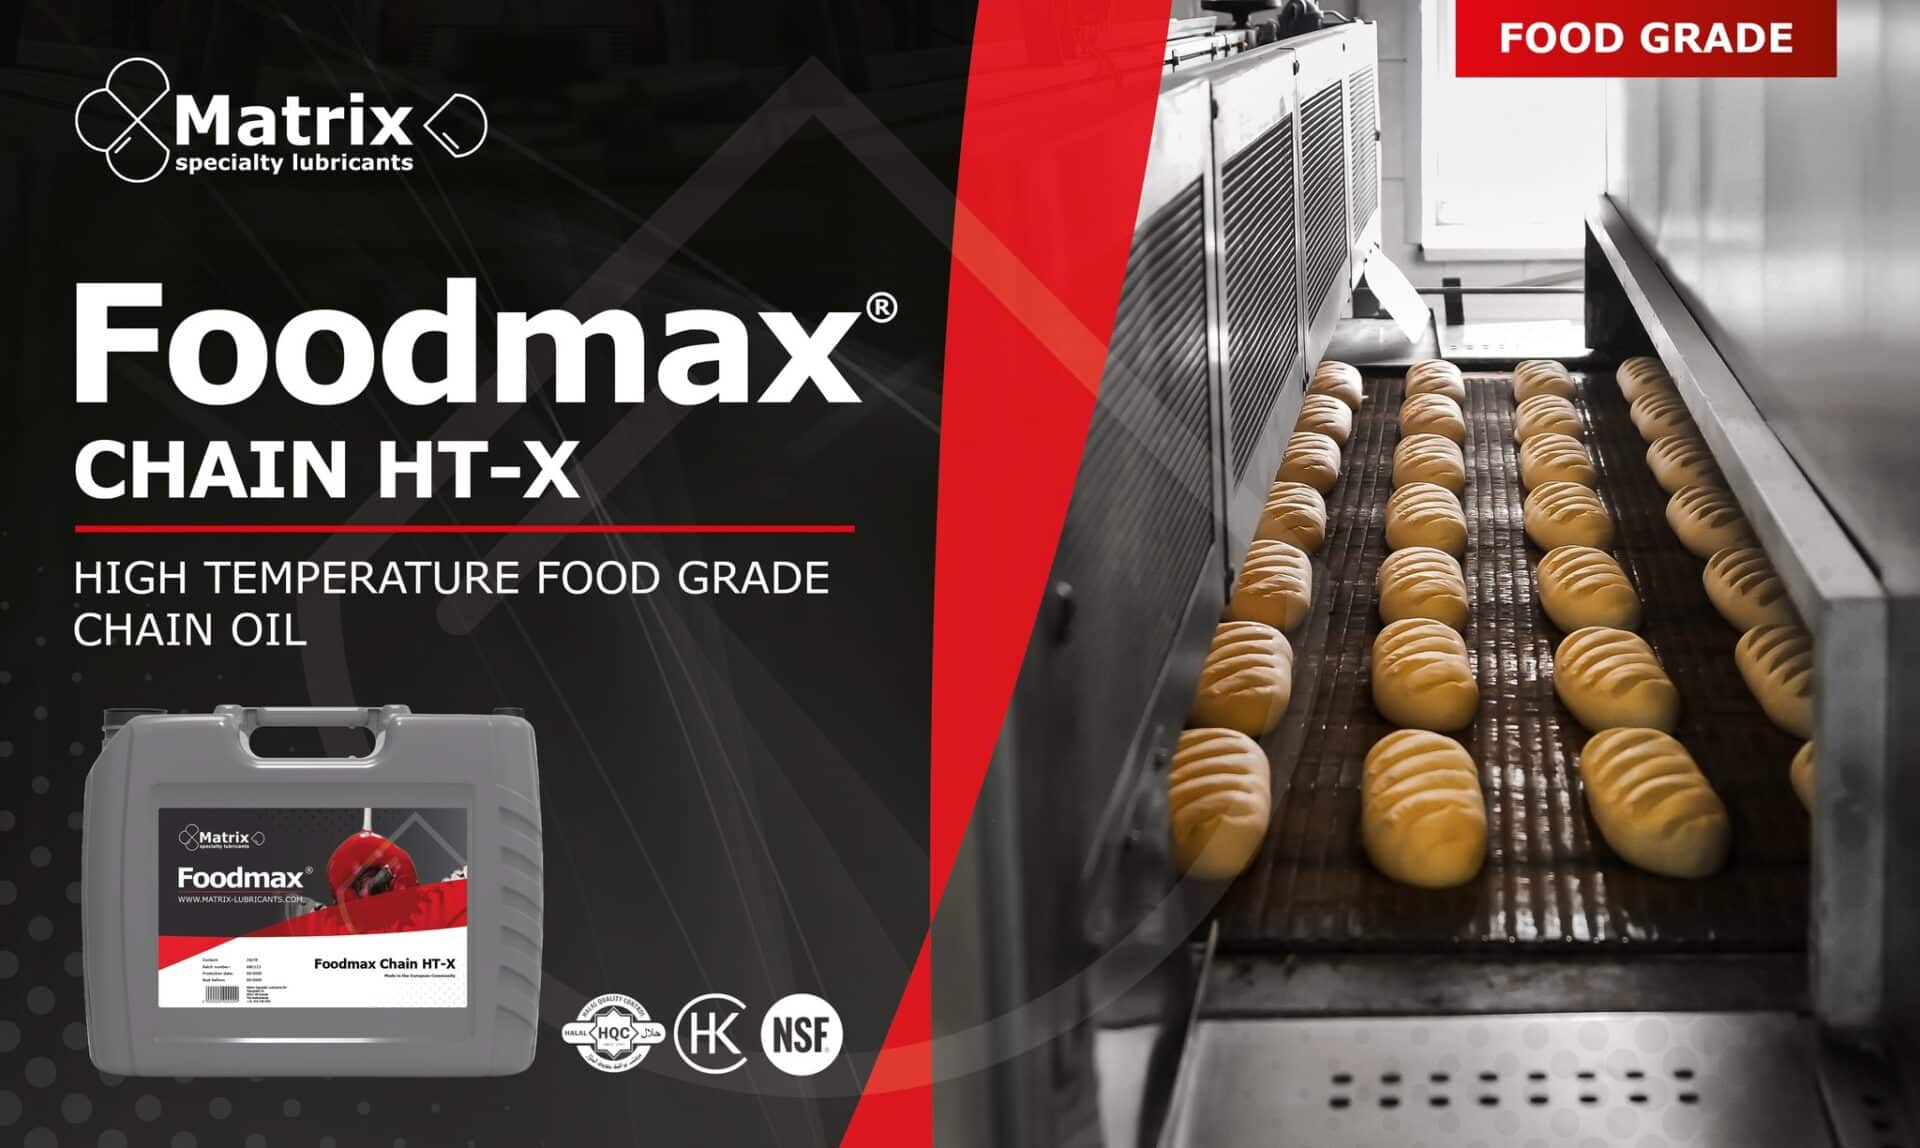 Matrix specialty lubricants' Foodmax Chain HT-X high temperature food grade chain oil